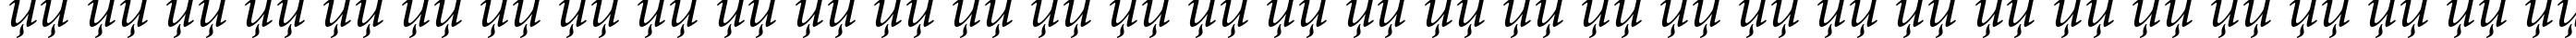 Пример написания русского алфавита шрифтом MinionCyr-Italic